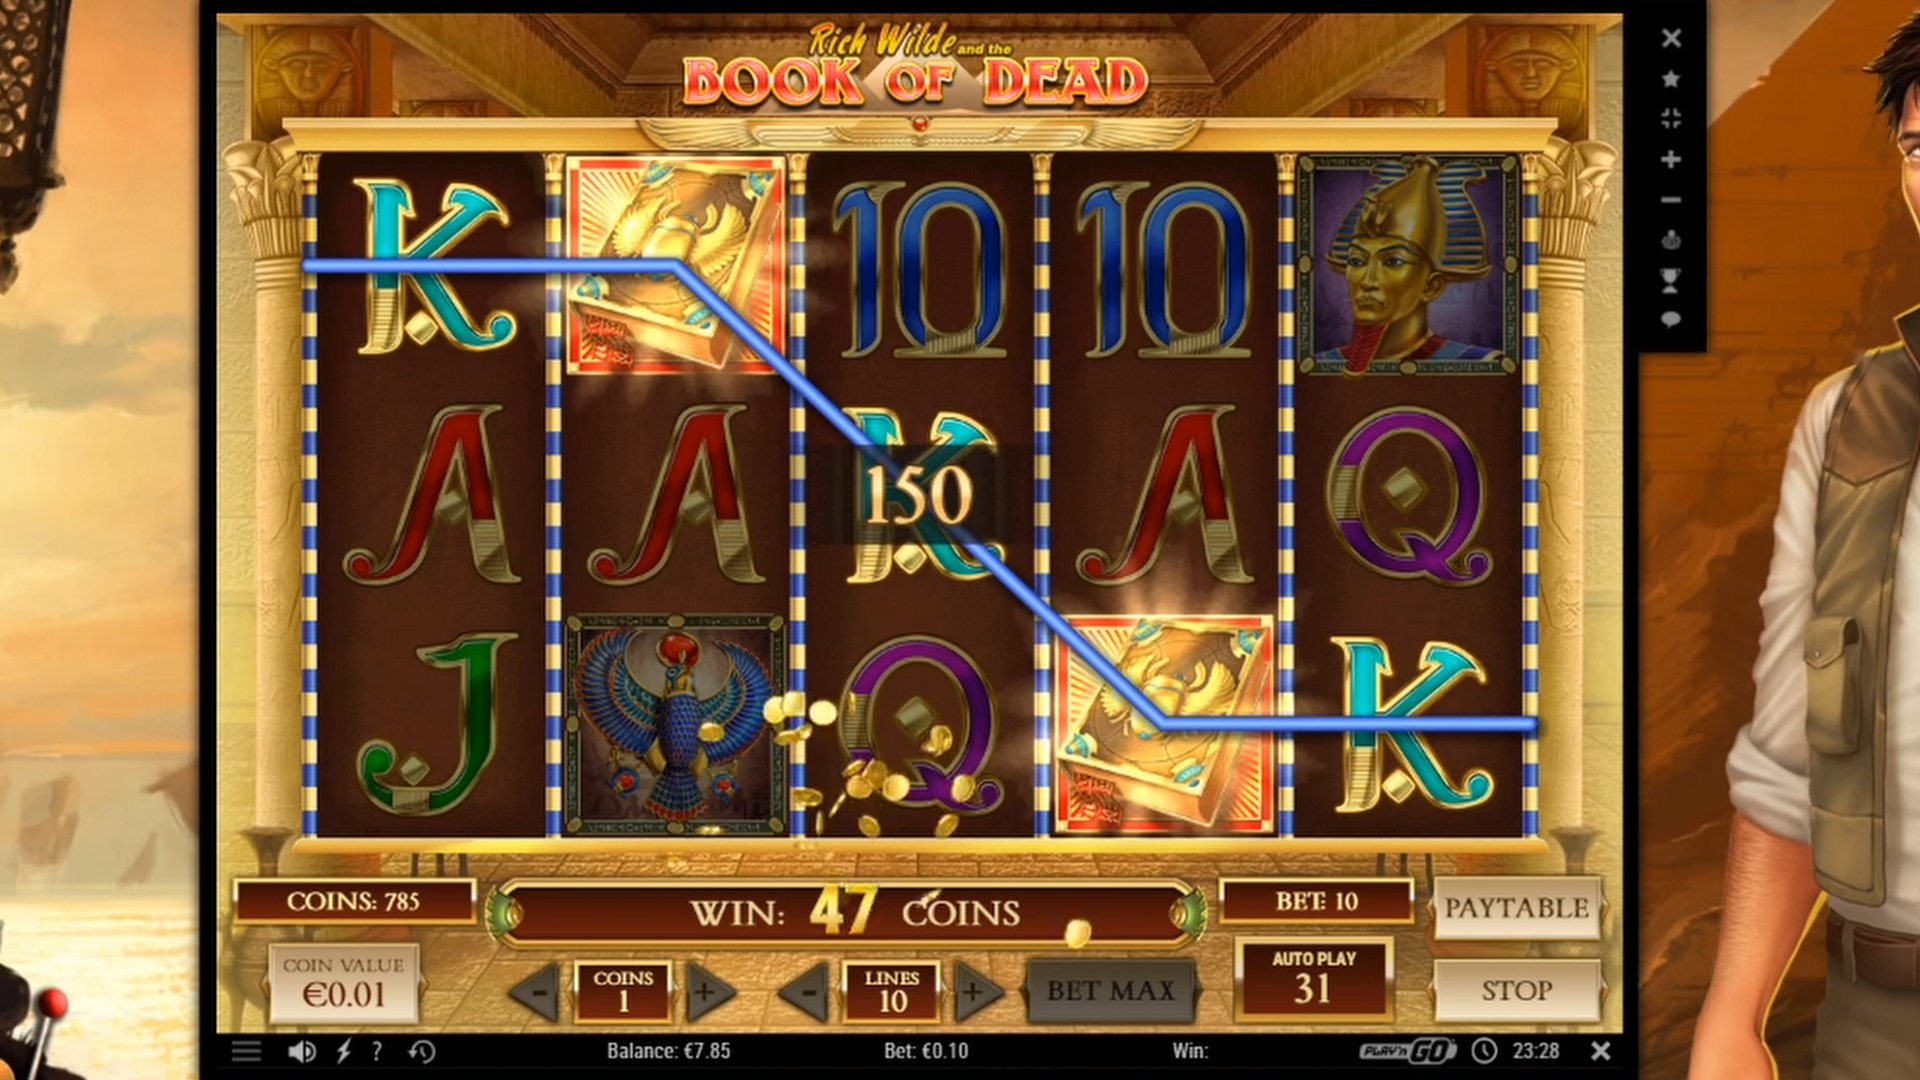 BonusFinder - Find Casino Bonus Offers & Deals Online - TopSlotSite.com